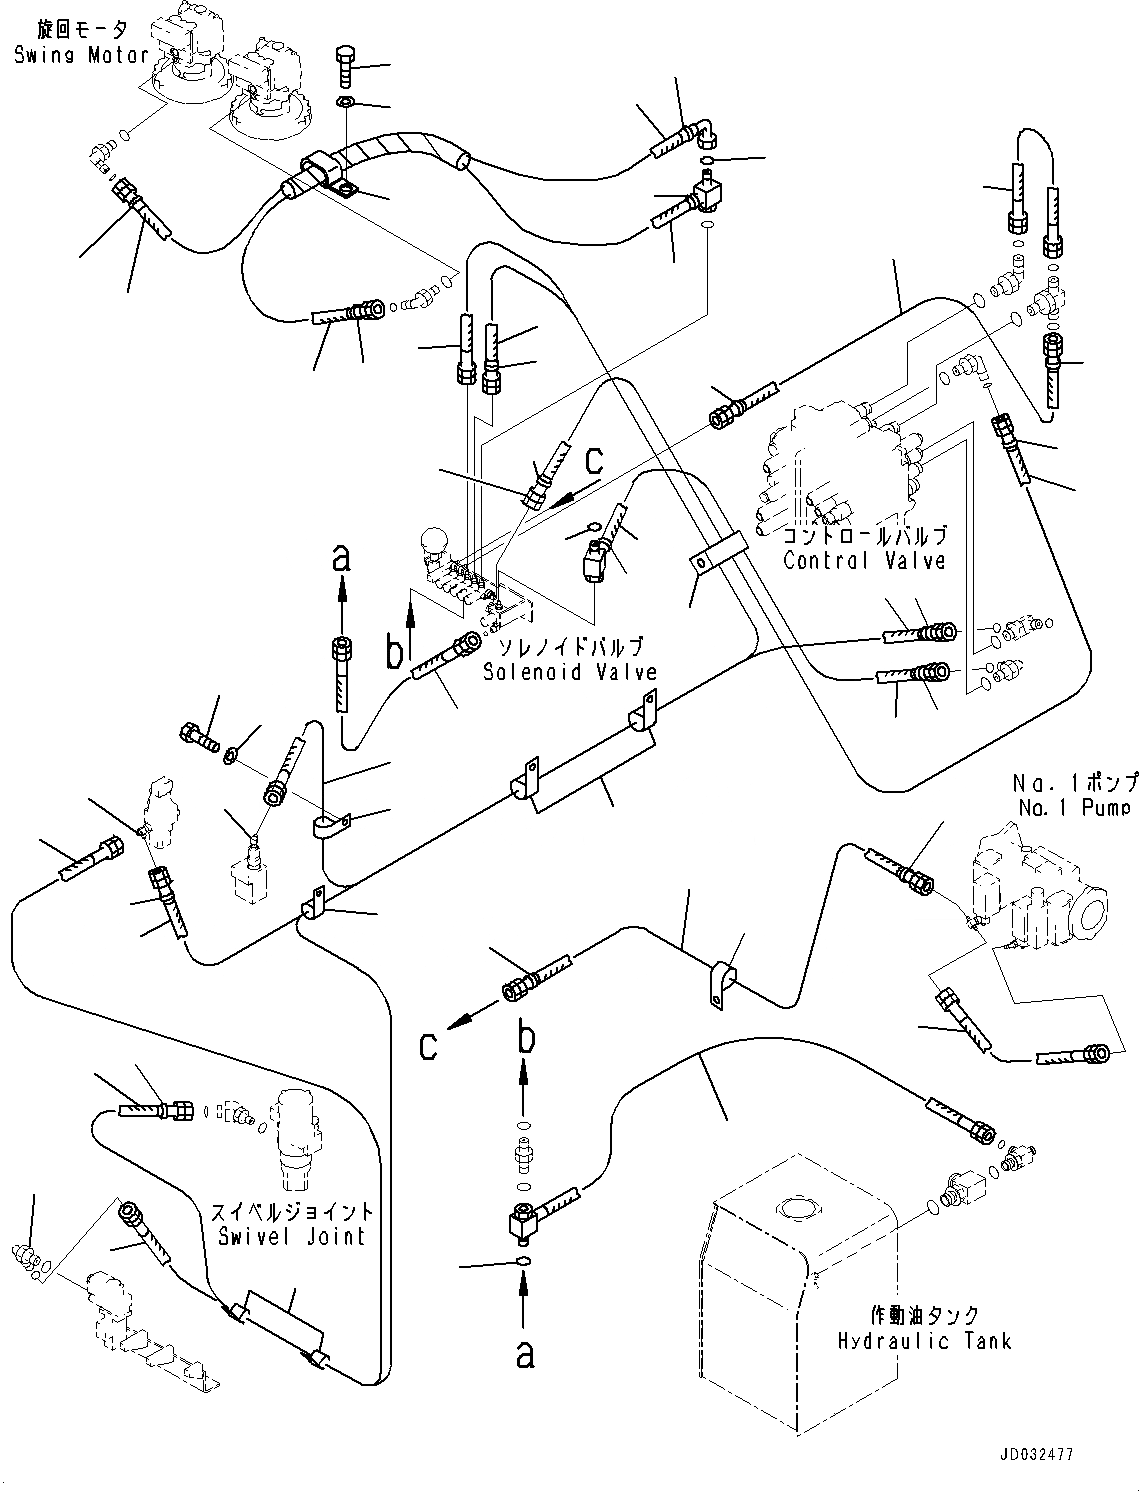 Схема запчастей Komatsu PC600-8R1 - СОЛЕНОИДНЫЙ КЛАПАН ТРУБЫ, ШЛАНГИ (№7-) СОЛЕНОИДНЫЙ КЛАПАН ТРУБЫ, PROVISION ДЛЯ -АКТУАТОР